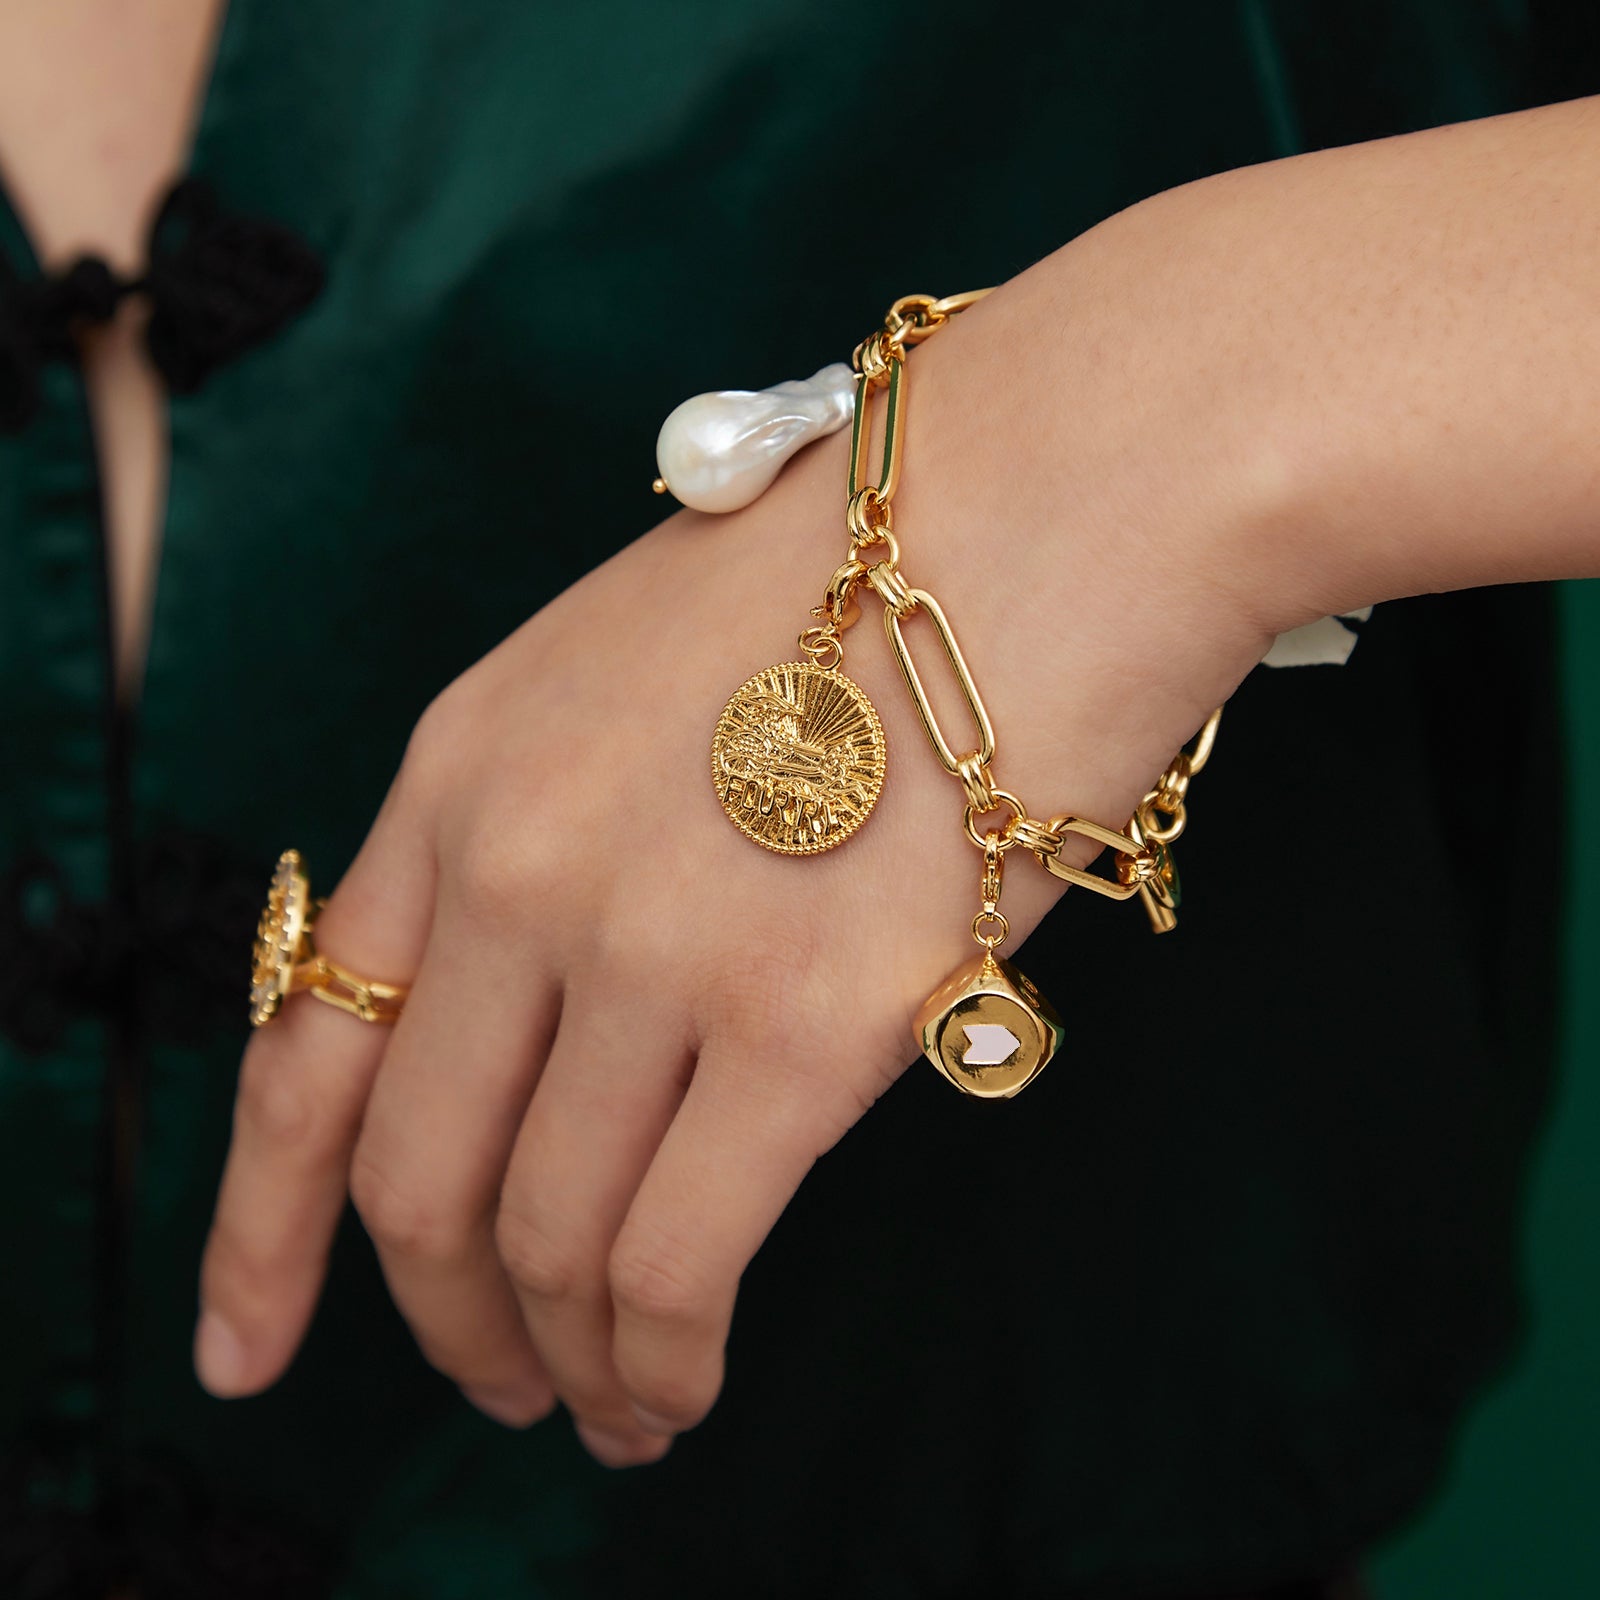 Queen Elizabeth II Coin Chain Bracelet | The French Shoppe